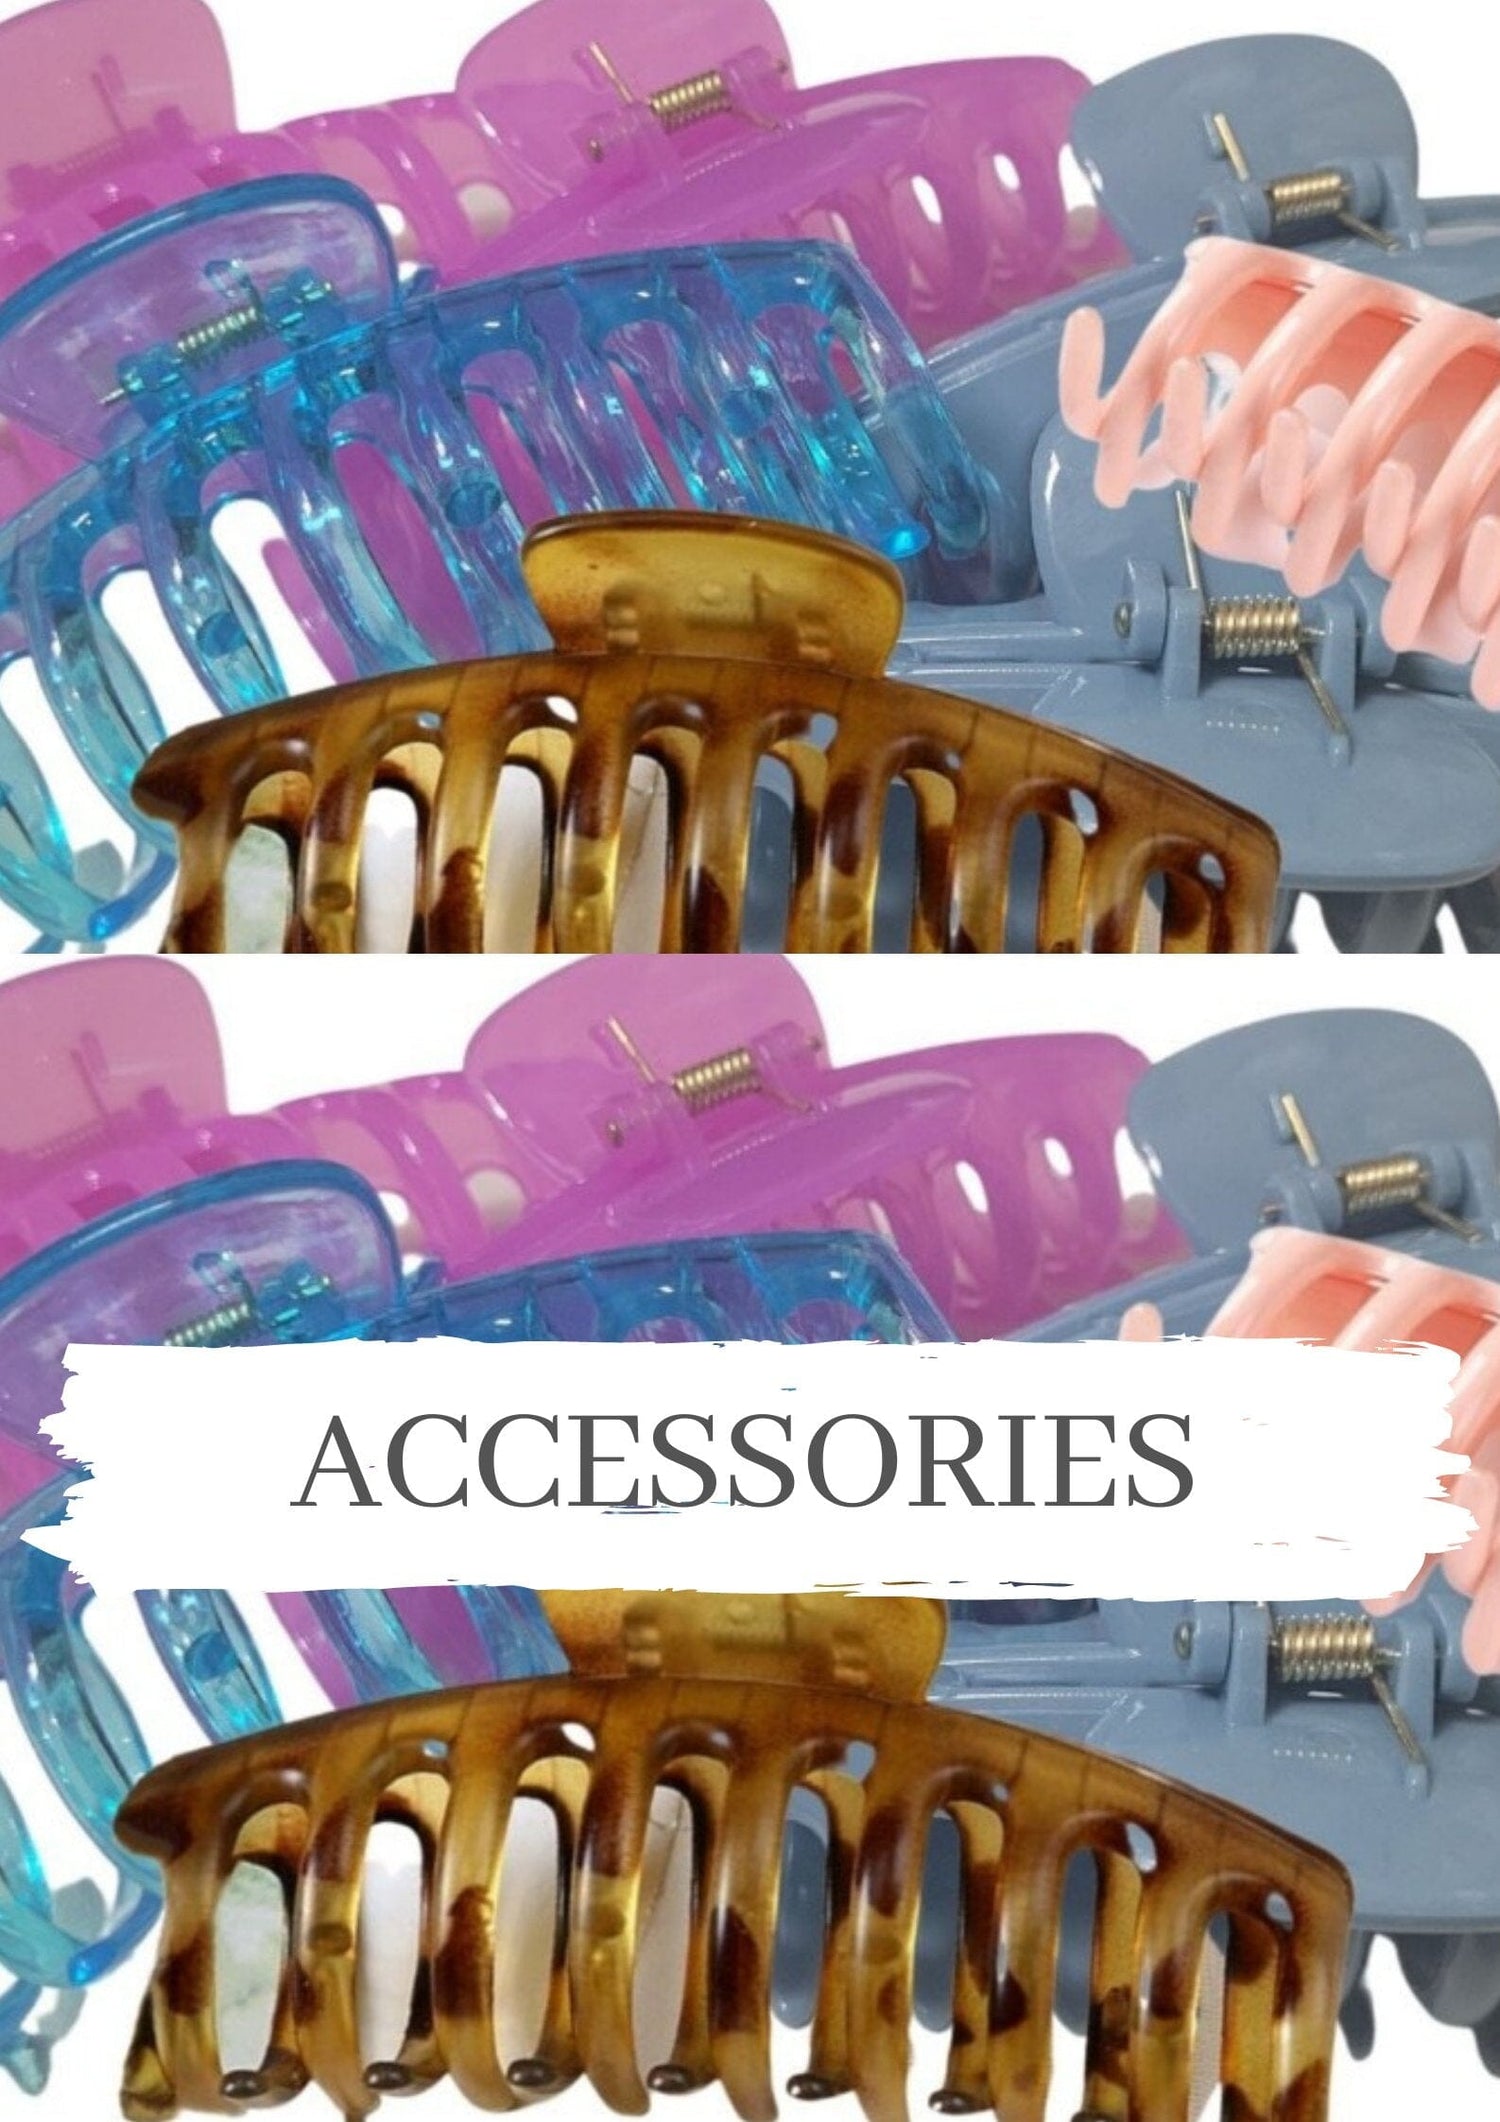 Accessories- Handbags, jewellery & more